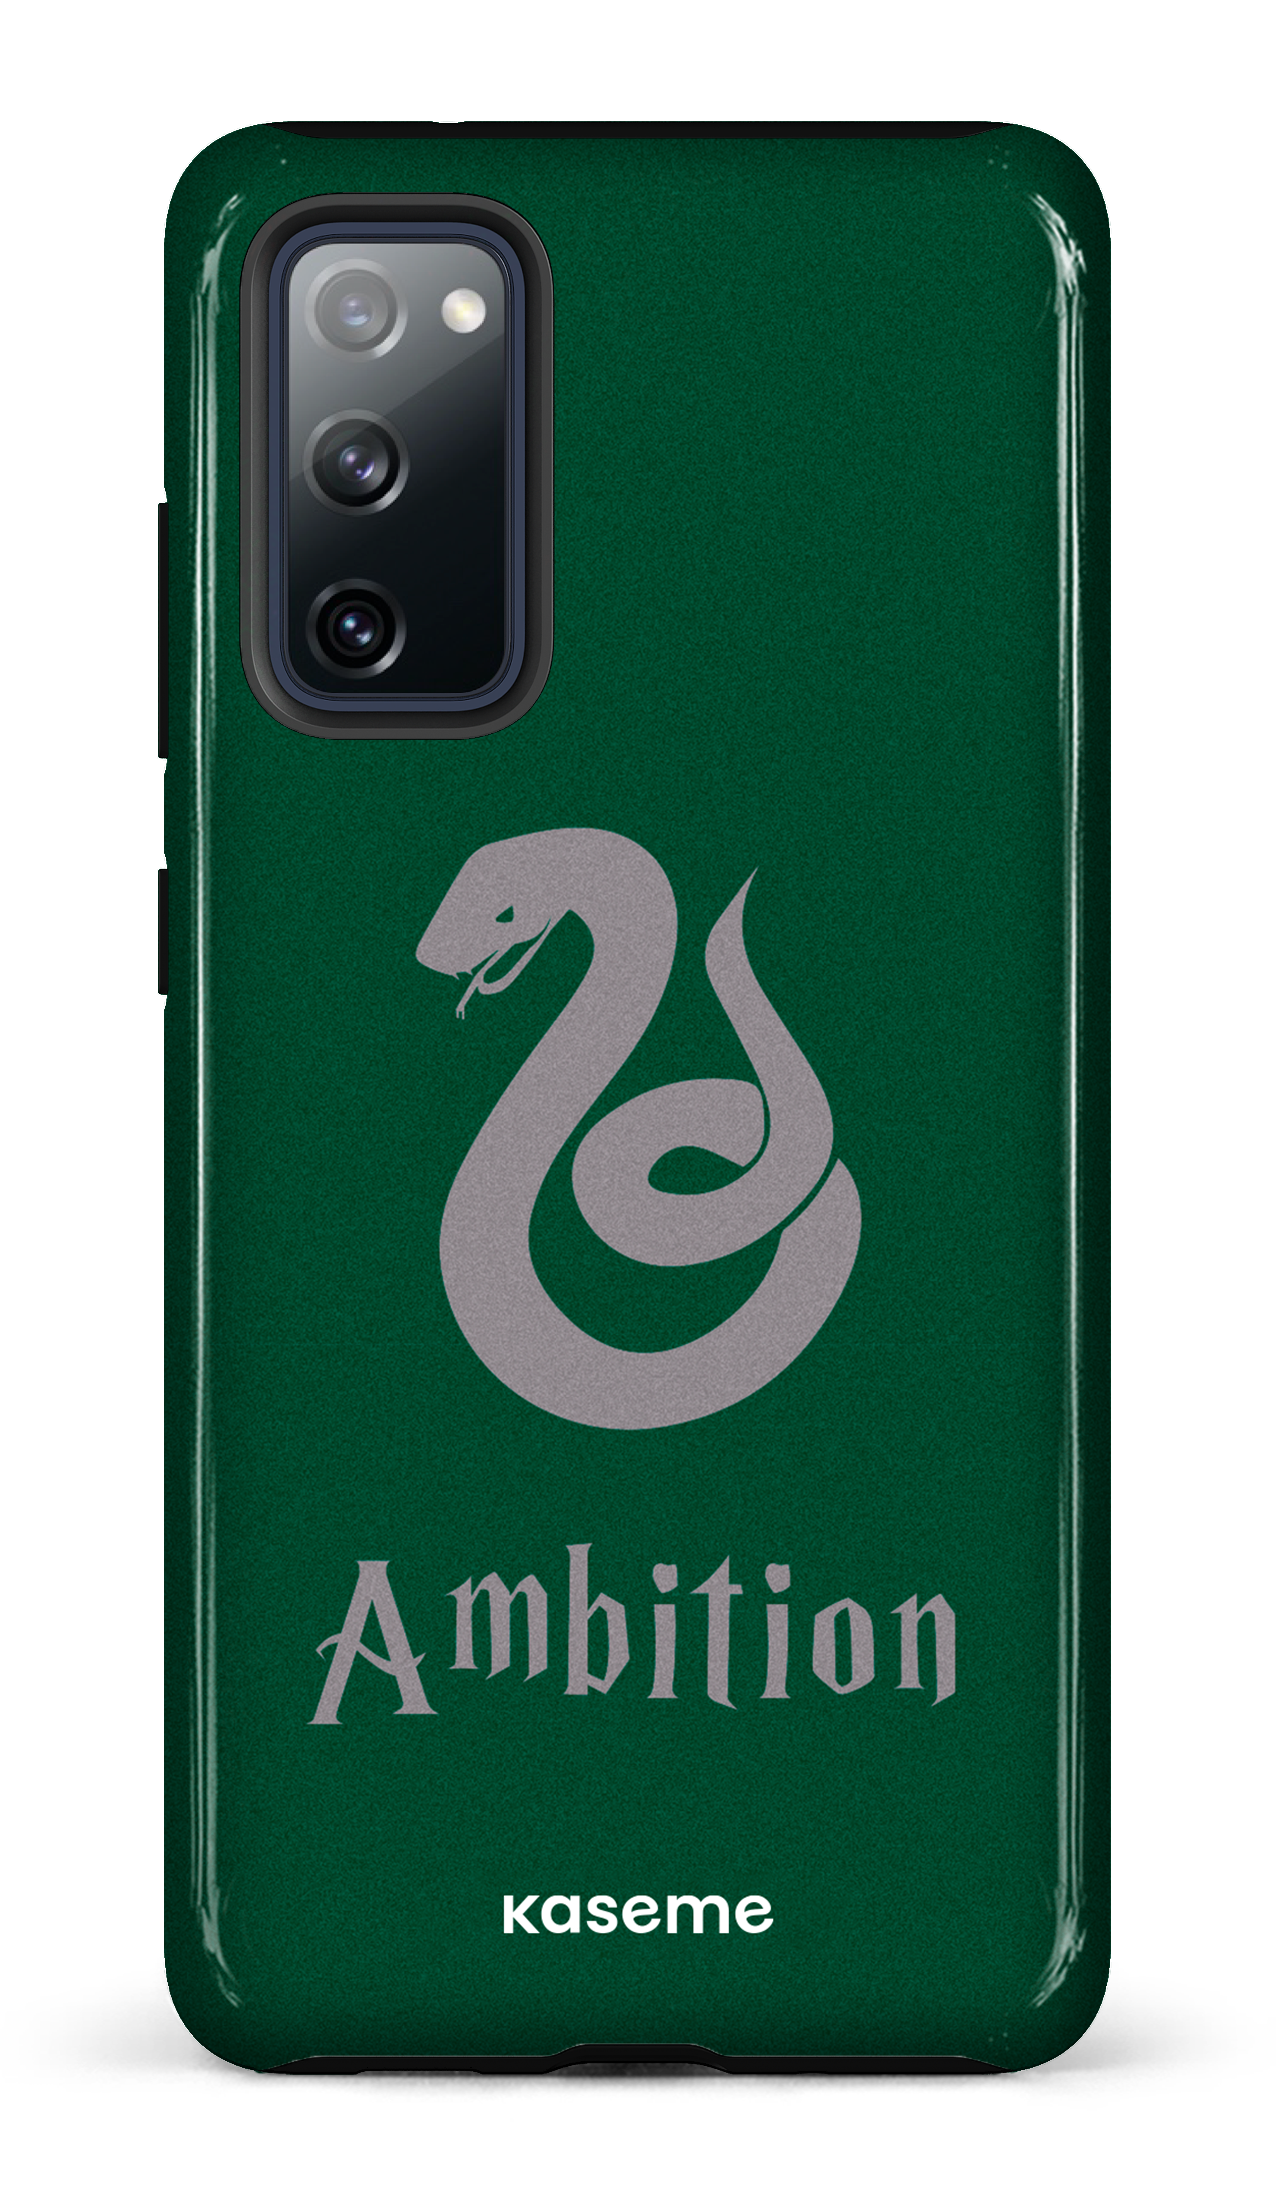 Ambition - Galaxy S20 FE